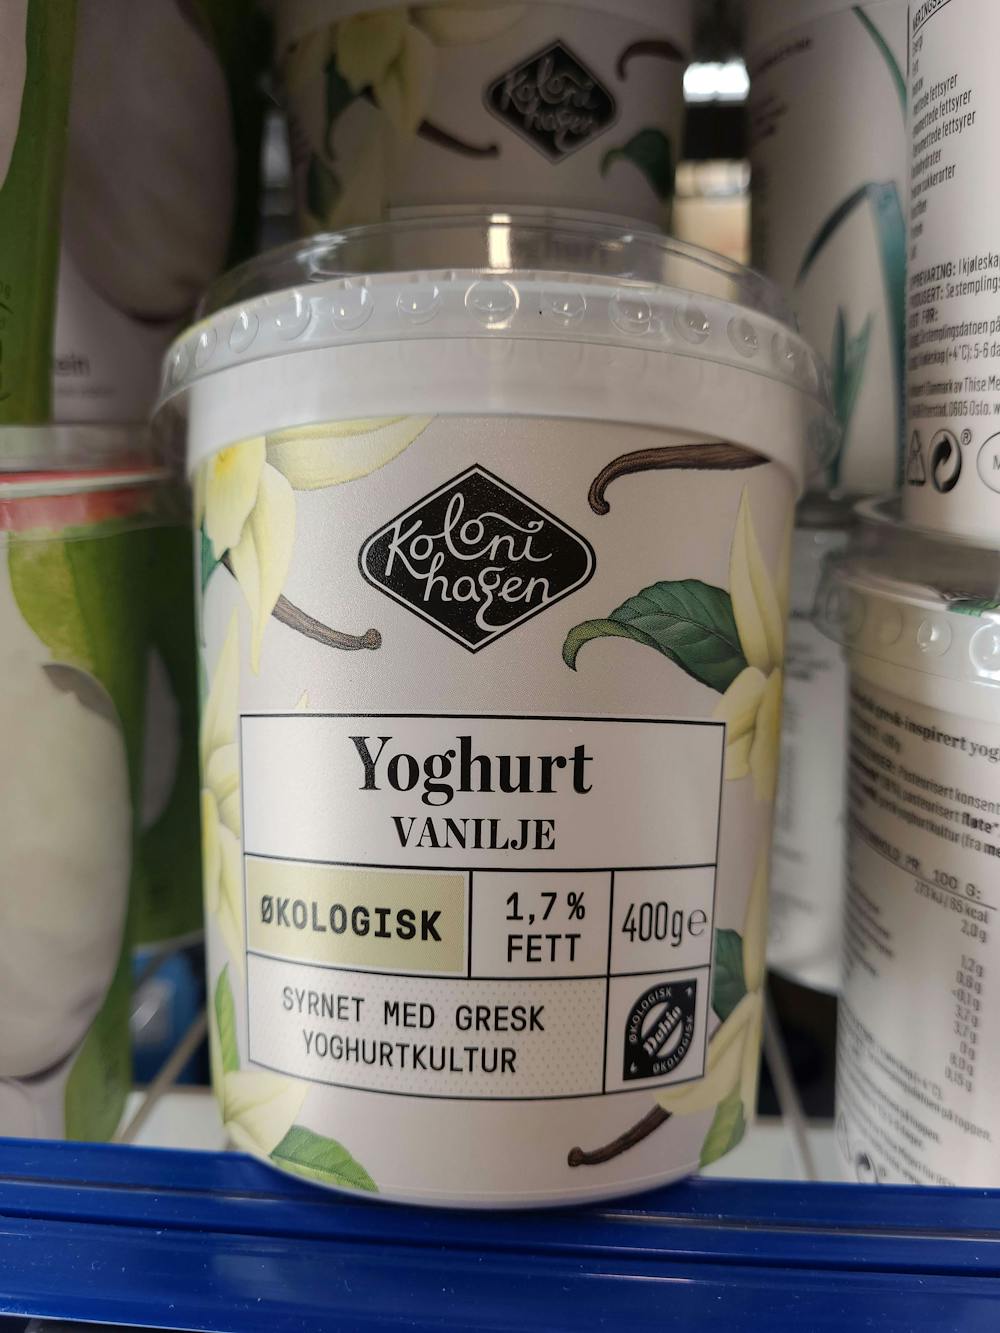 Yoghurt vanilje , Kolonihagen